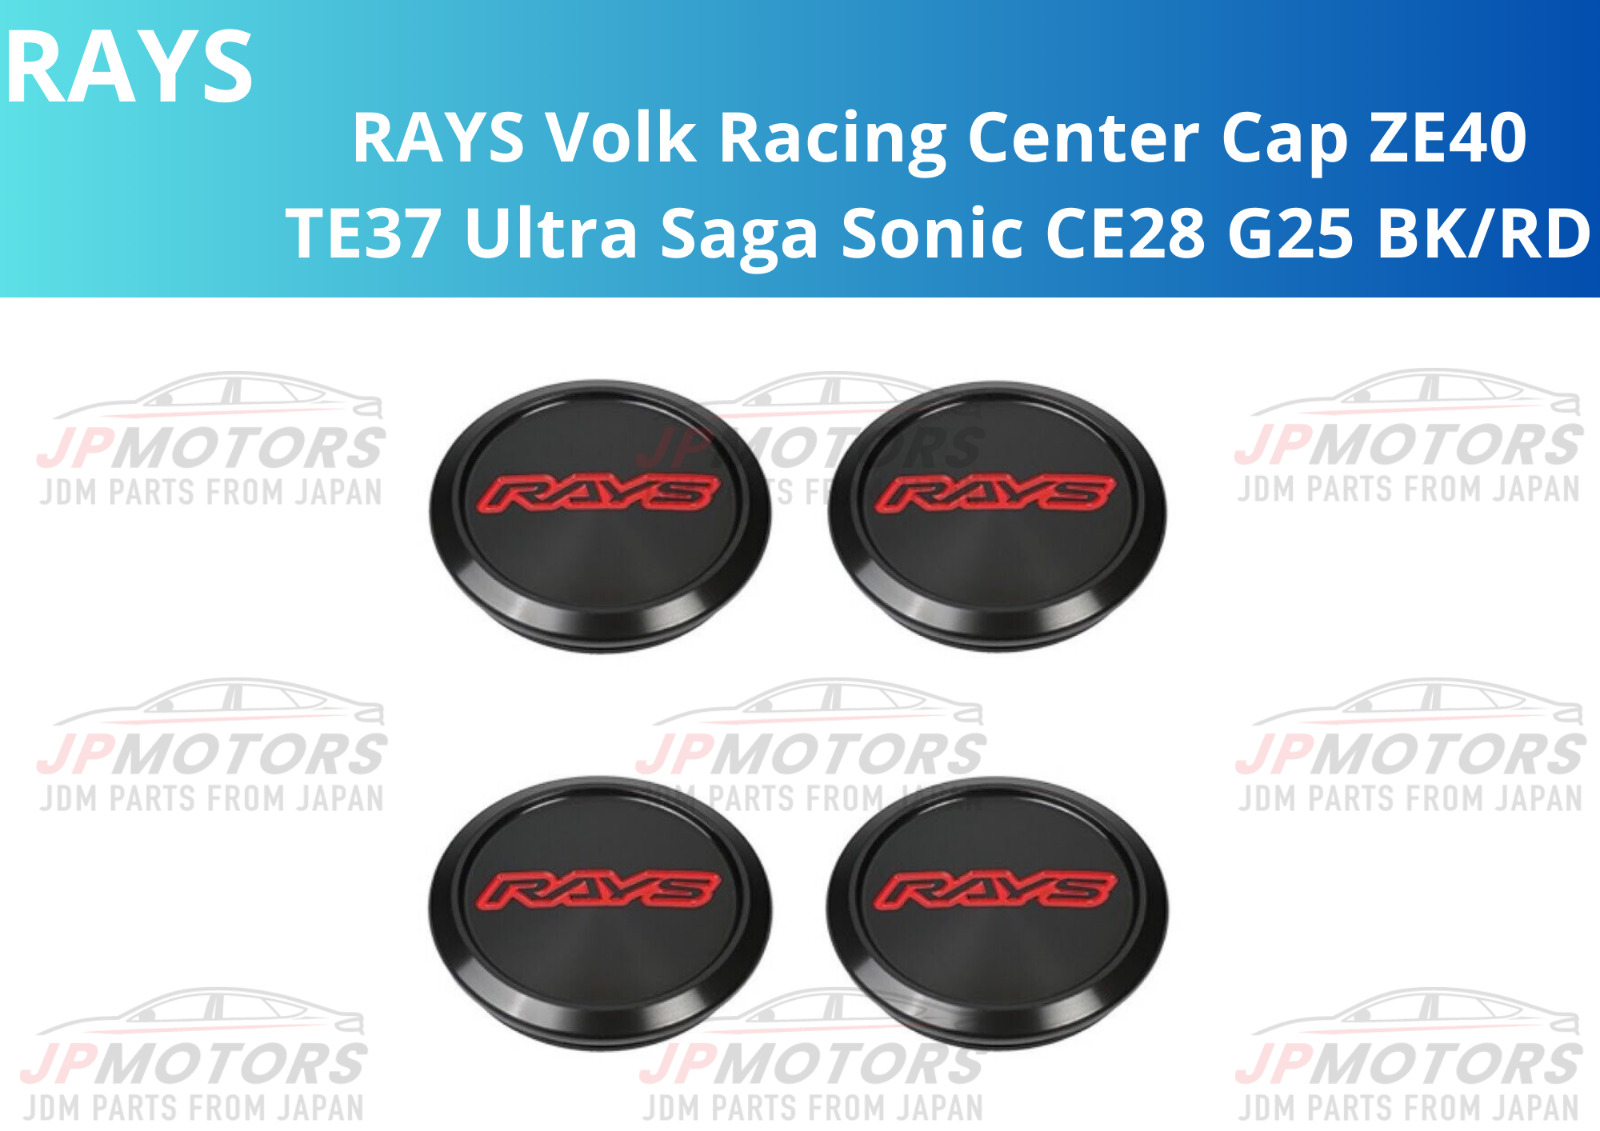 RAYS Volk Racing Center Cap ZE40 TE37 Ultra Saga Sonic CE28 G25 BK/RD 4PC